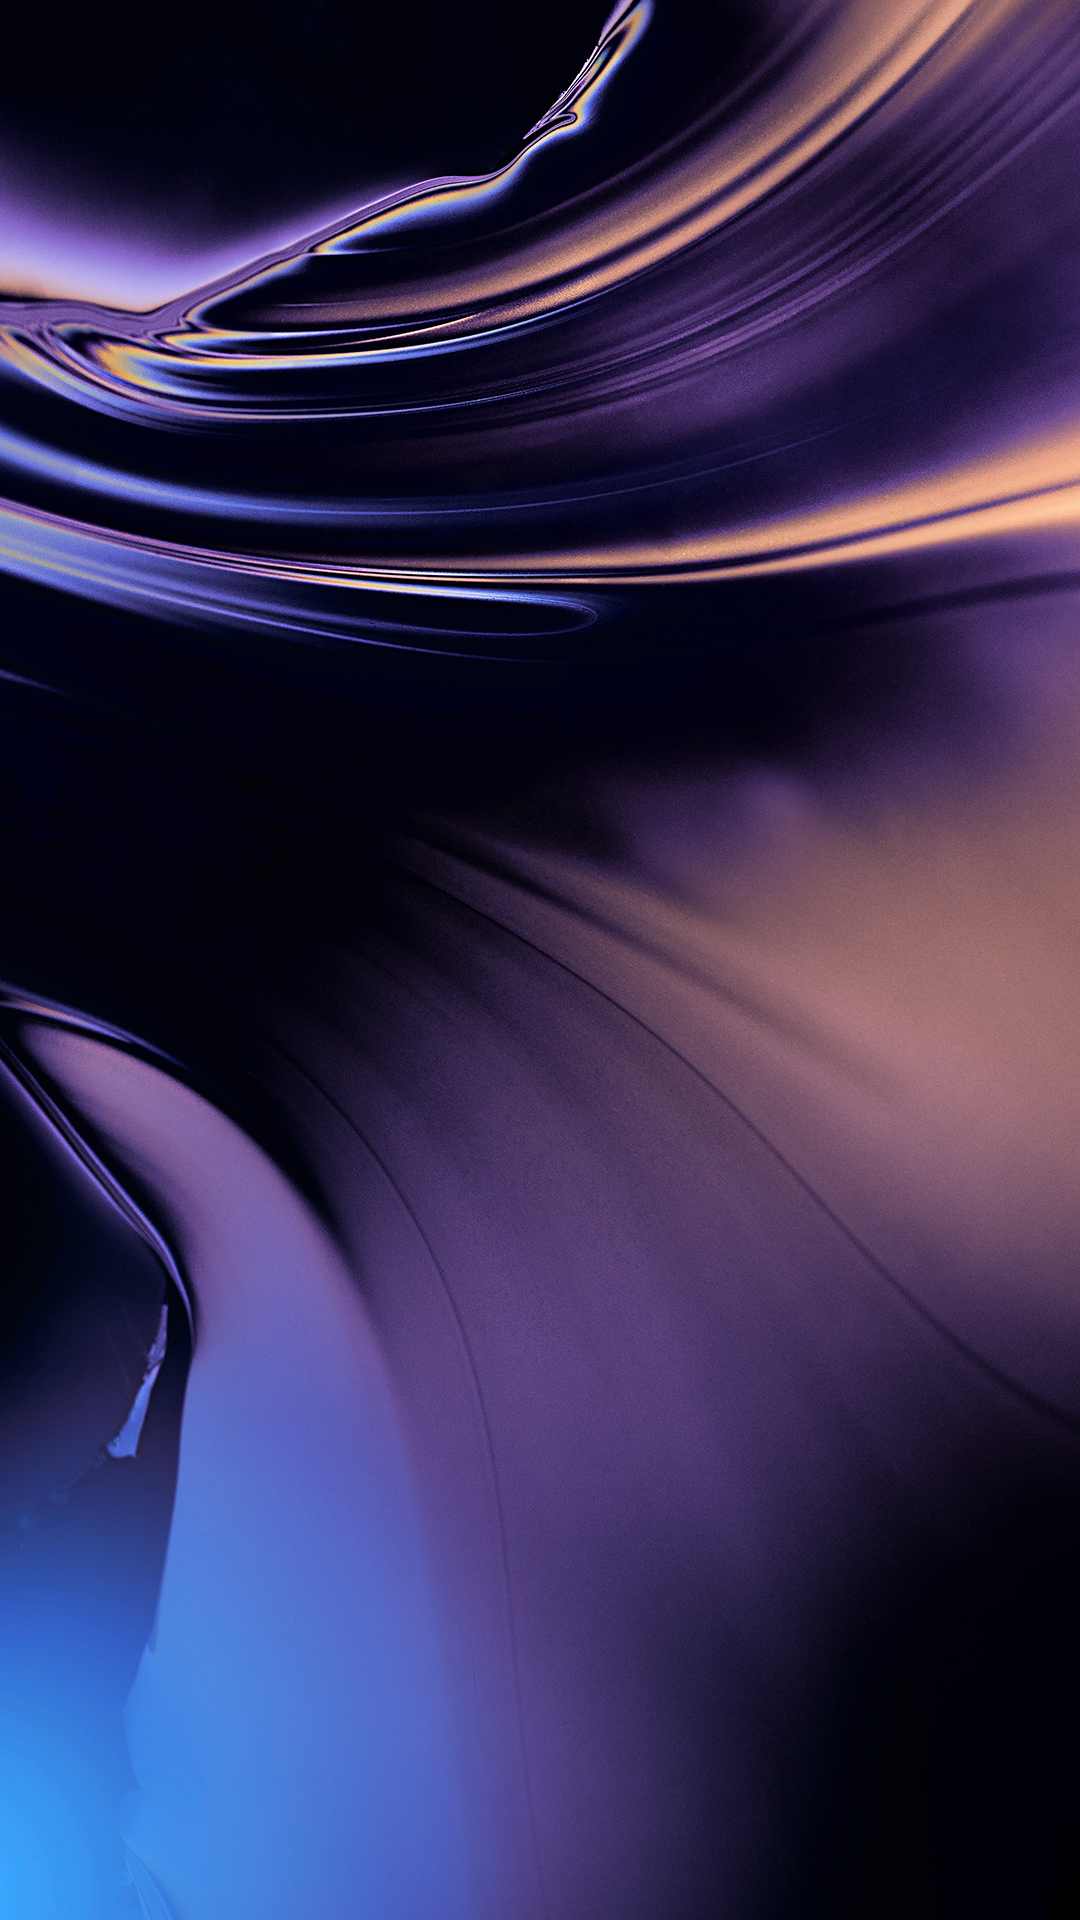 mac wallpaper for iphone,blue,purple,violet,cg artwork,electric blue